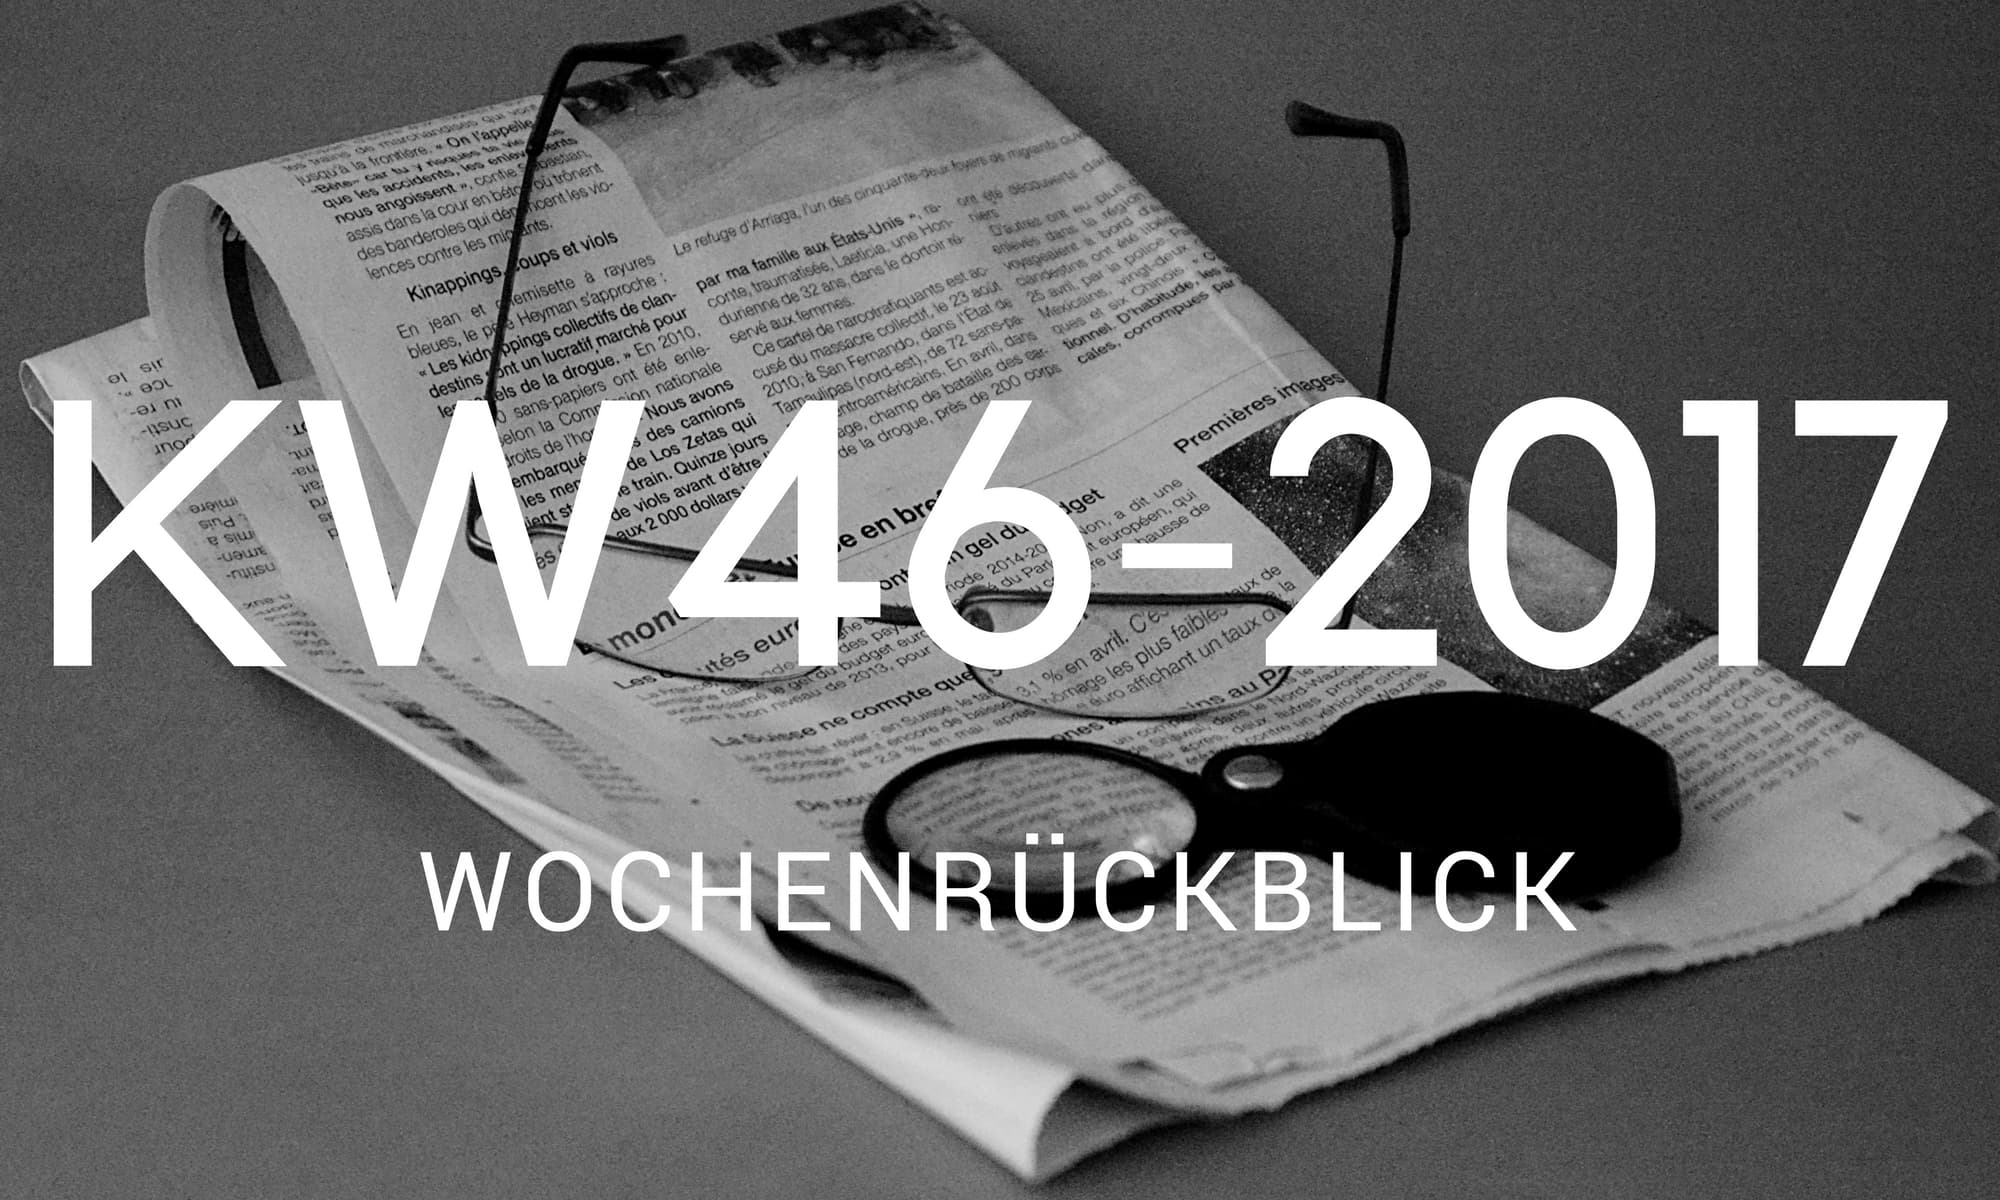 wochenrueckblick camping news KW46 2017